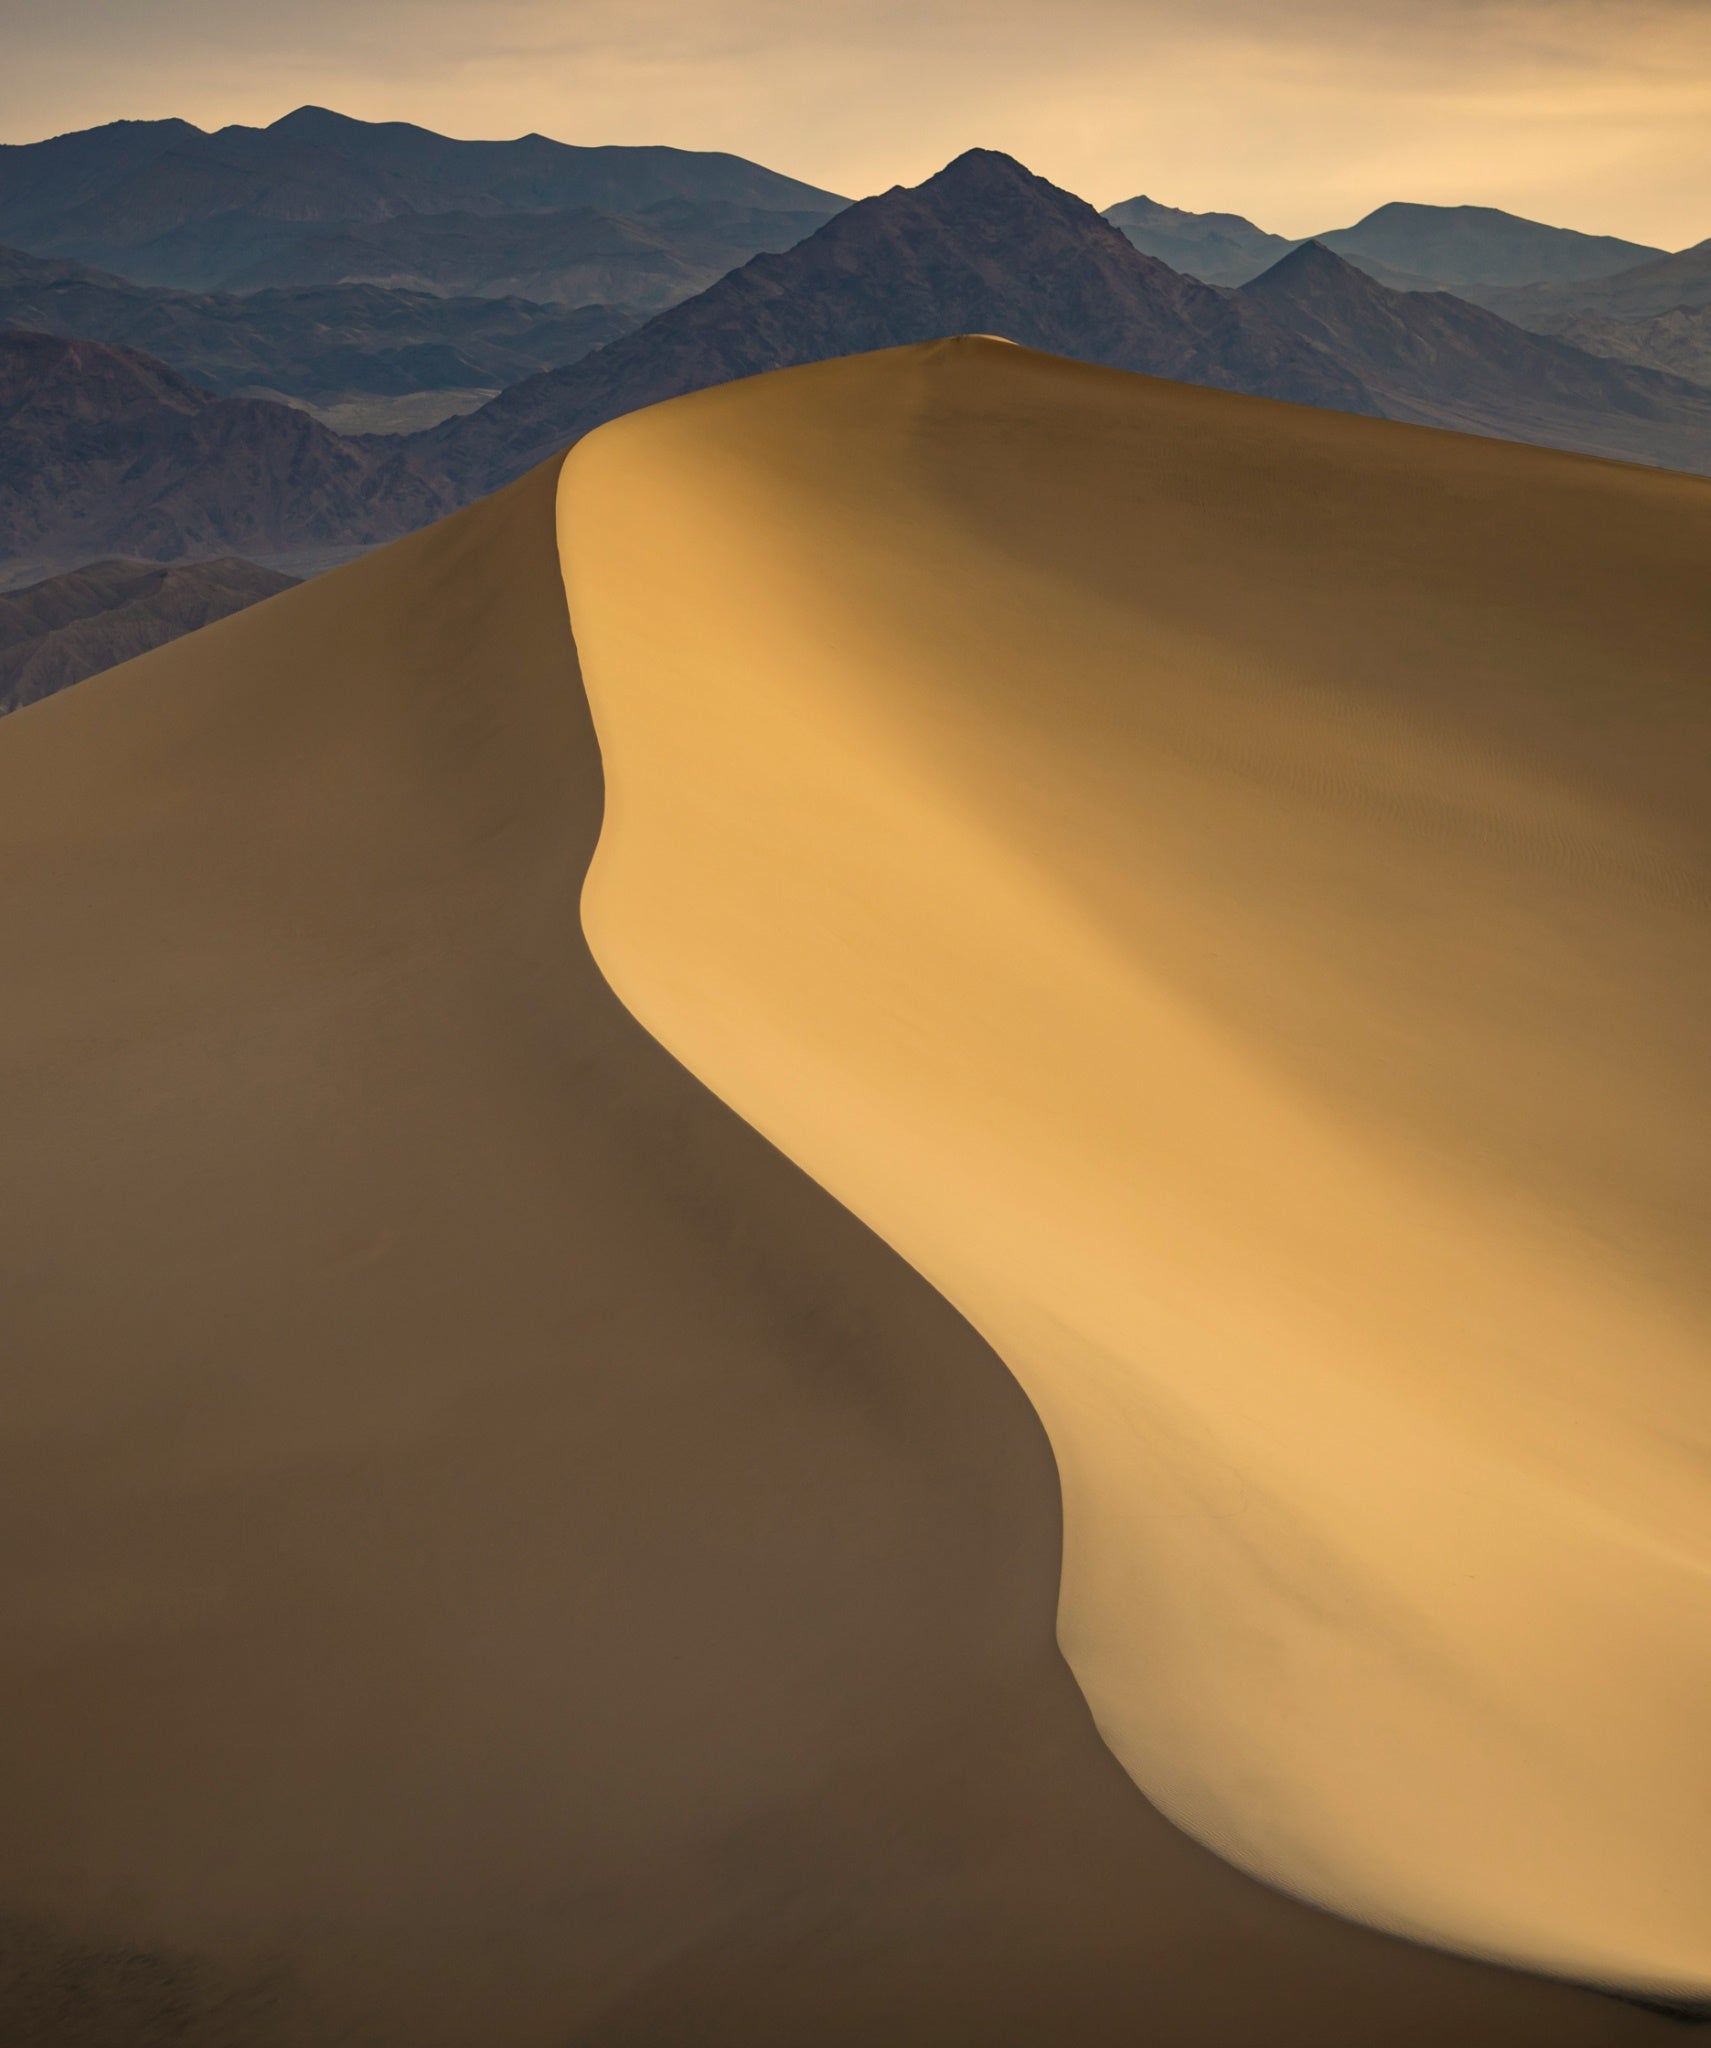 06 Death Valley National Park 02.jpg__PID:3047cd0b-df55-4701-ad4b-5262c9b692cf